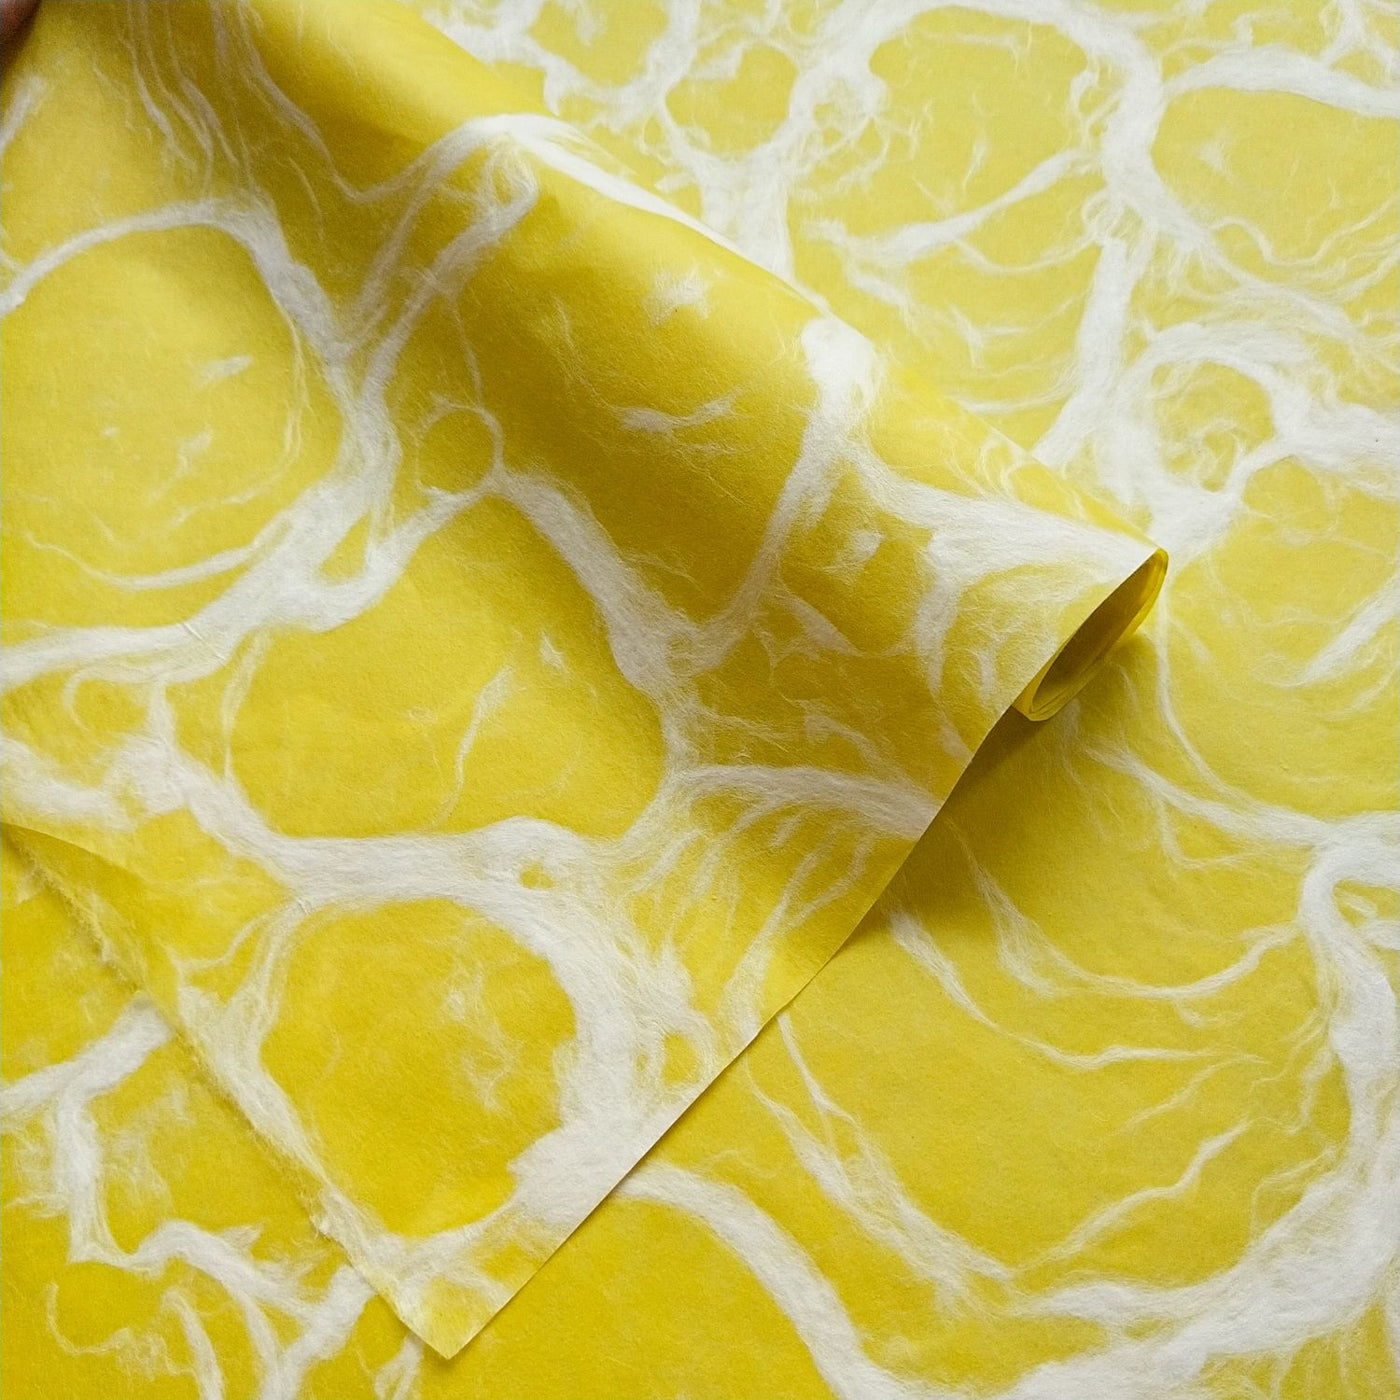 Ripple Mulberry Kozo Paper (White on Yellow)